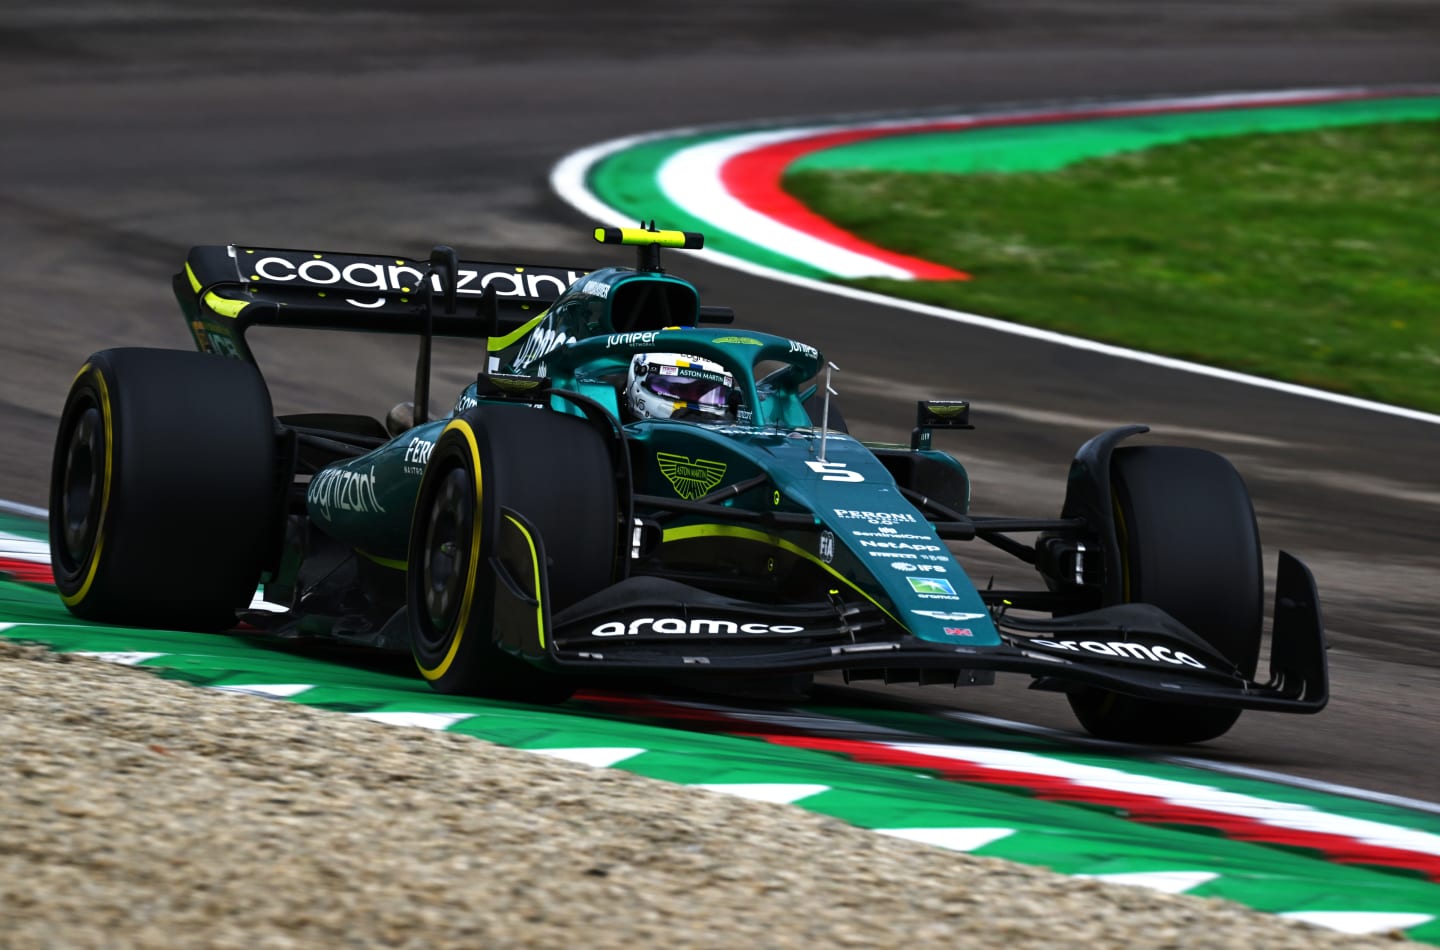 IMOLA, ITALY - APRIL 24: Sebastian Vettel of Germany driving the (5) Aston Martin AMR22 Mercedes on